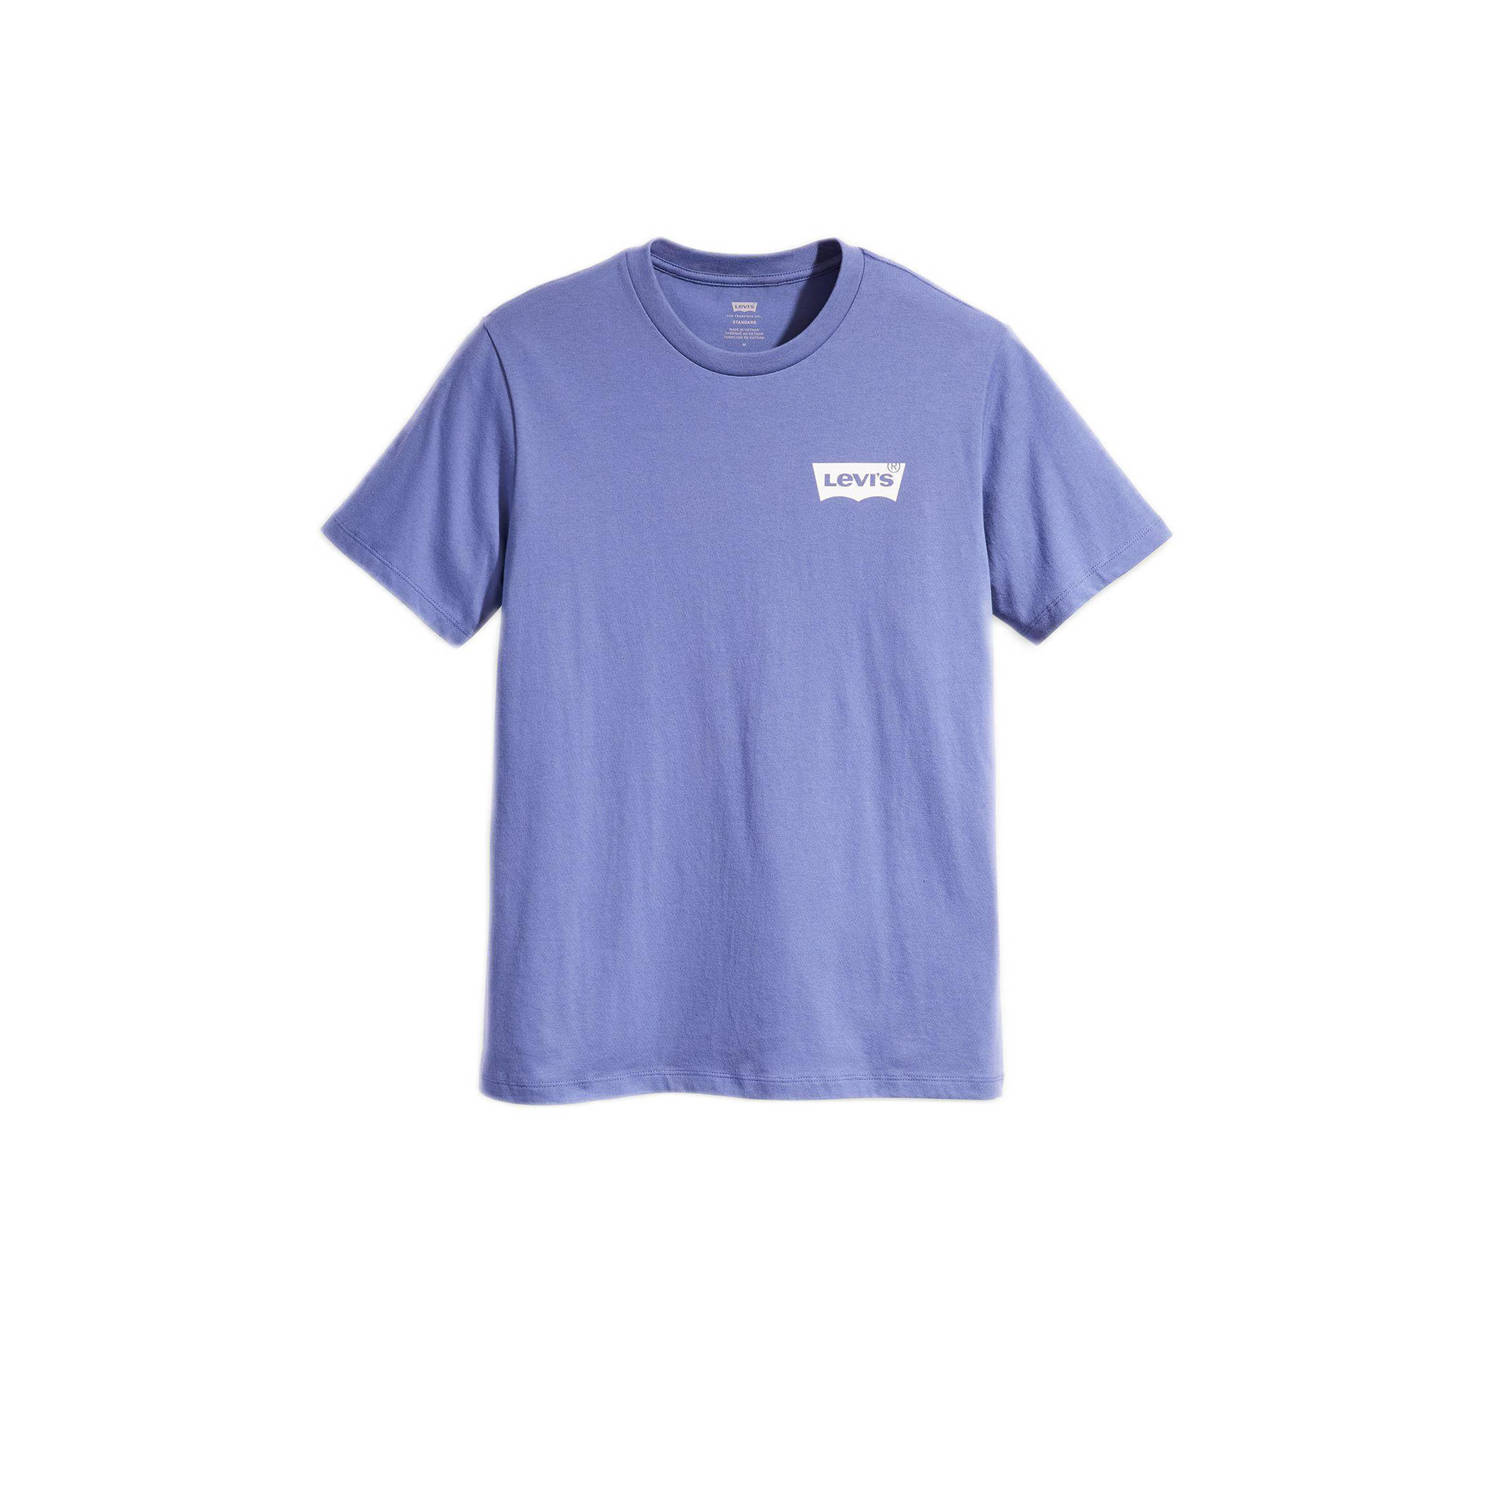 Levi's T-shirt met logo blauw